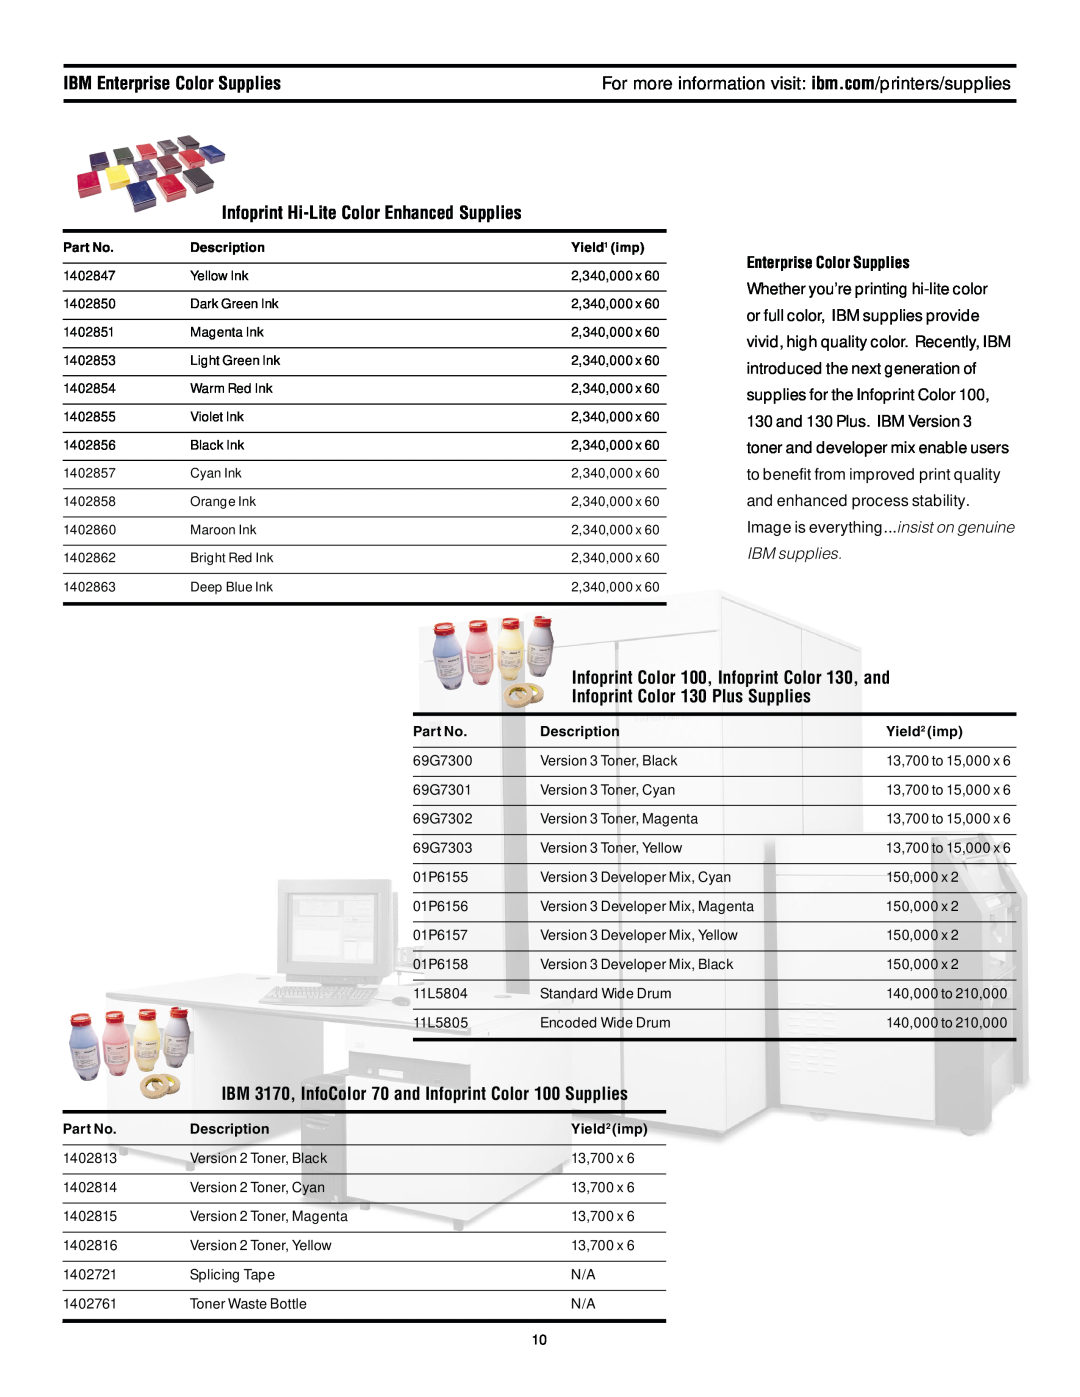 IBM 6400 manual IBM Enterprise Color Supplies, Infoprint Hi-Lite Color Enhanced Supplies, Infoprint Color 130 Plus Supplies 